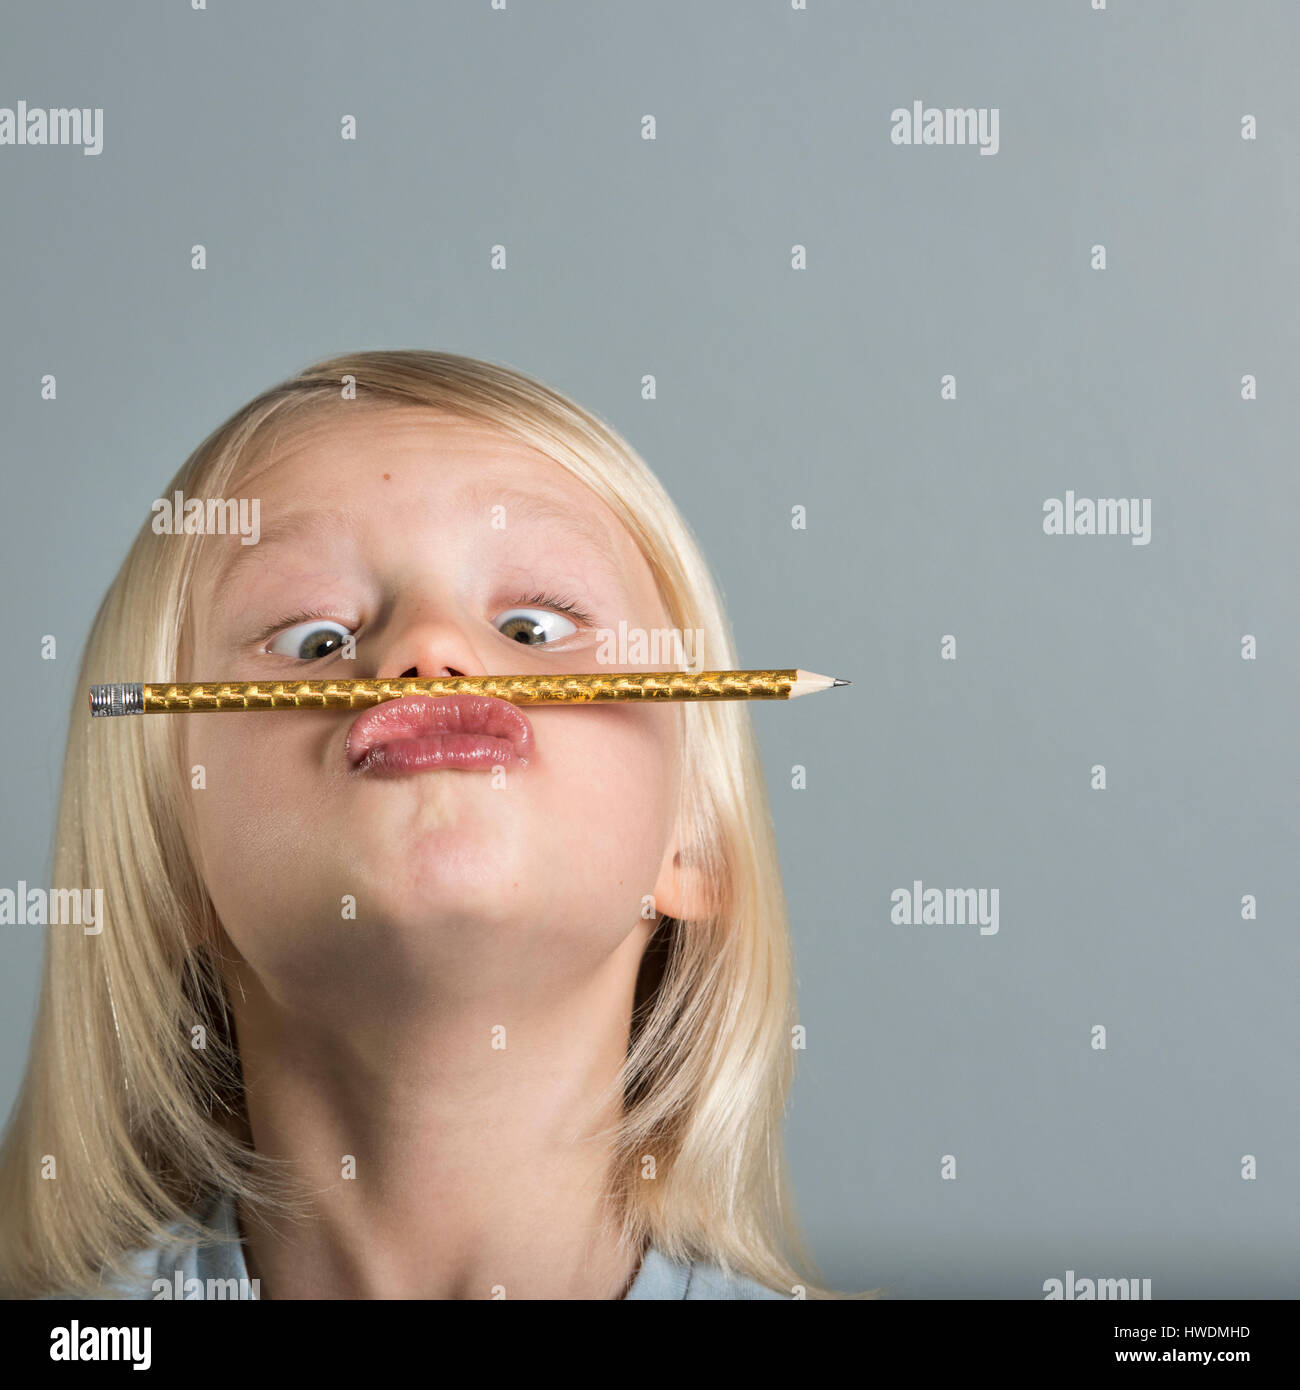 Portrait of boy balancing pencil on puckered lips Stock Photo